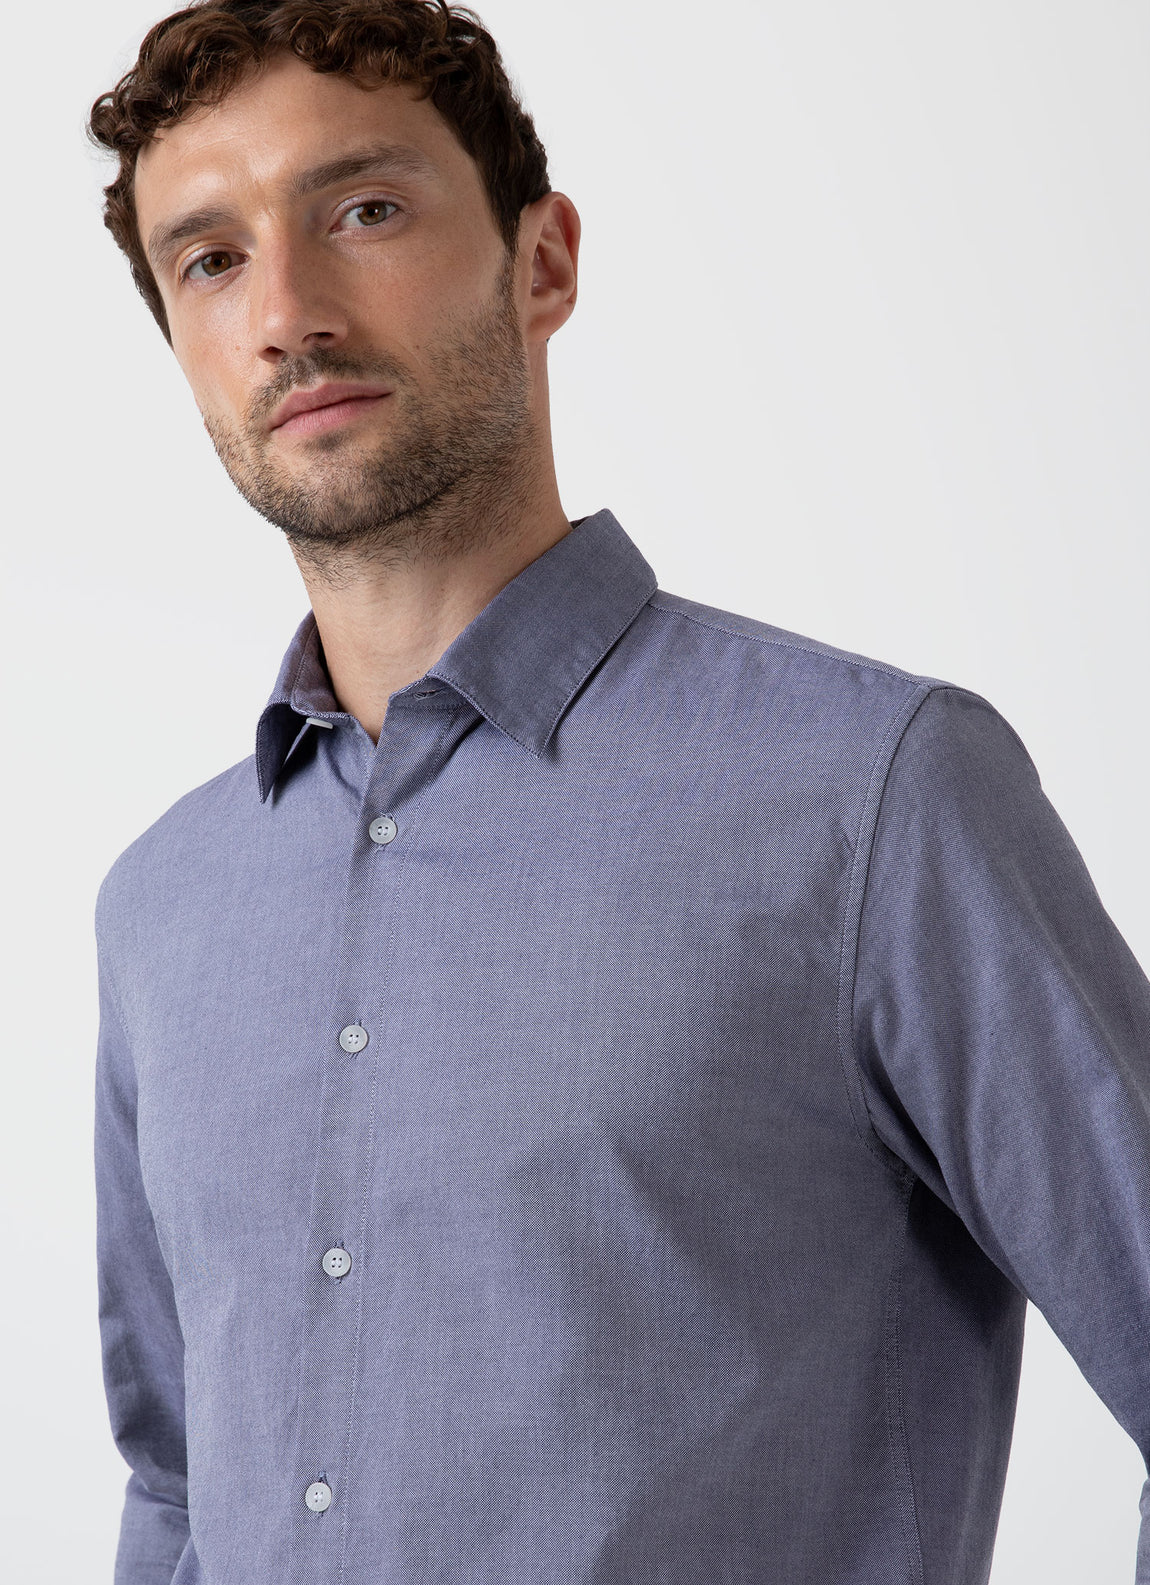 Men's Oxford Shirt in Dark Blue | Sunspel